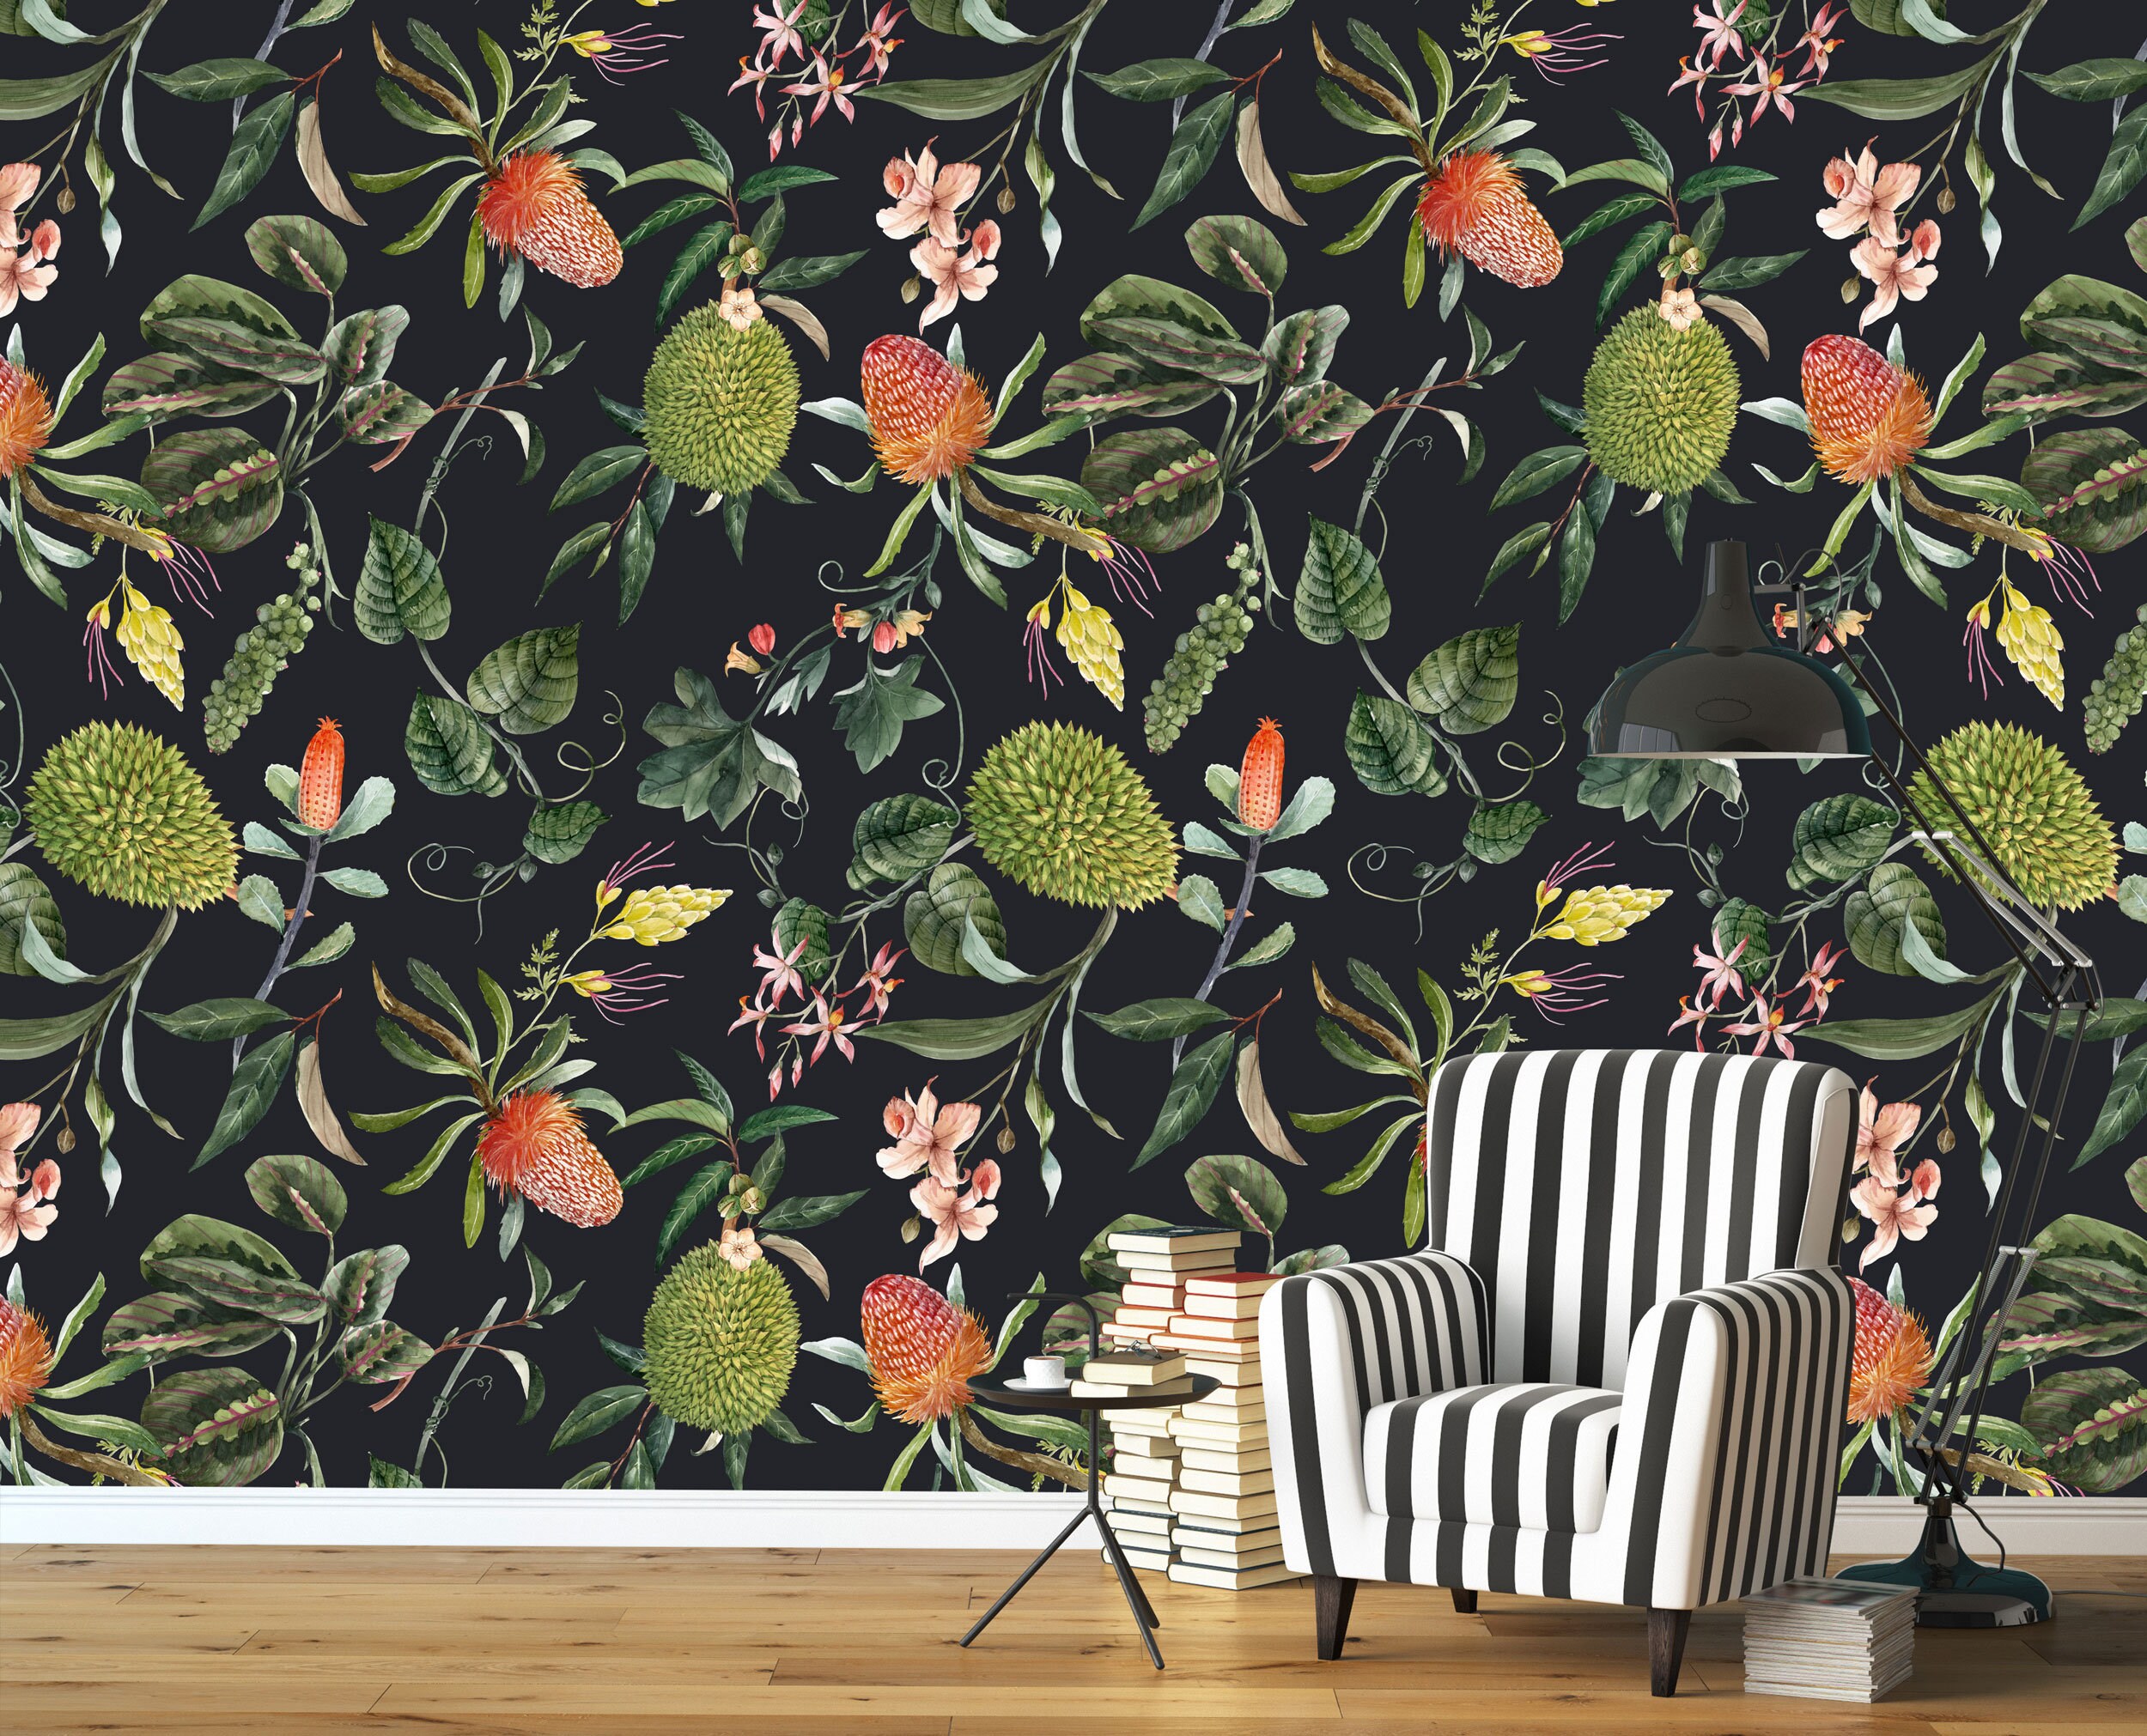 Exotic Leaves Wall Mural Tropical Leaves Wallpaper Blooming | Etsy